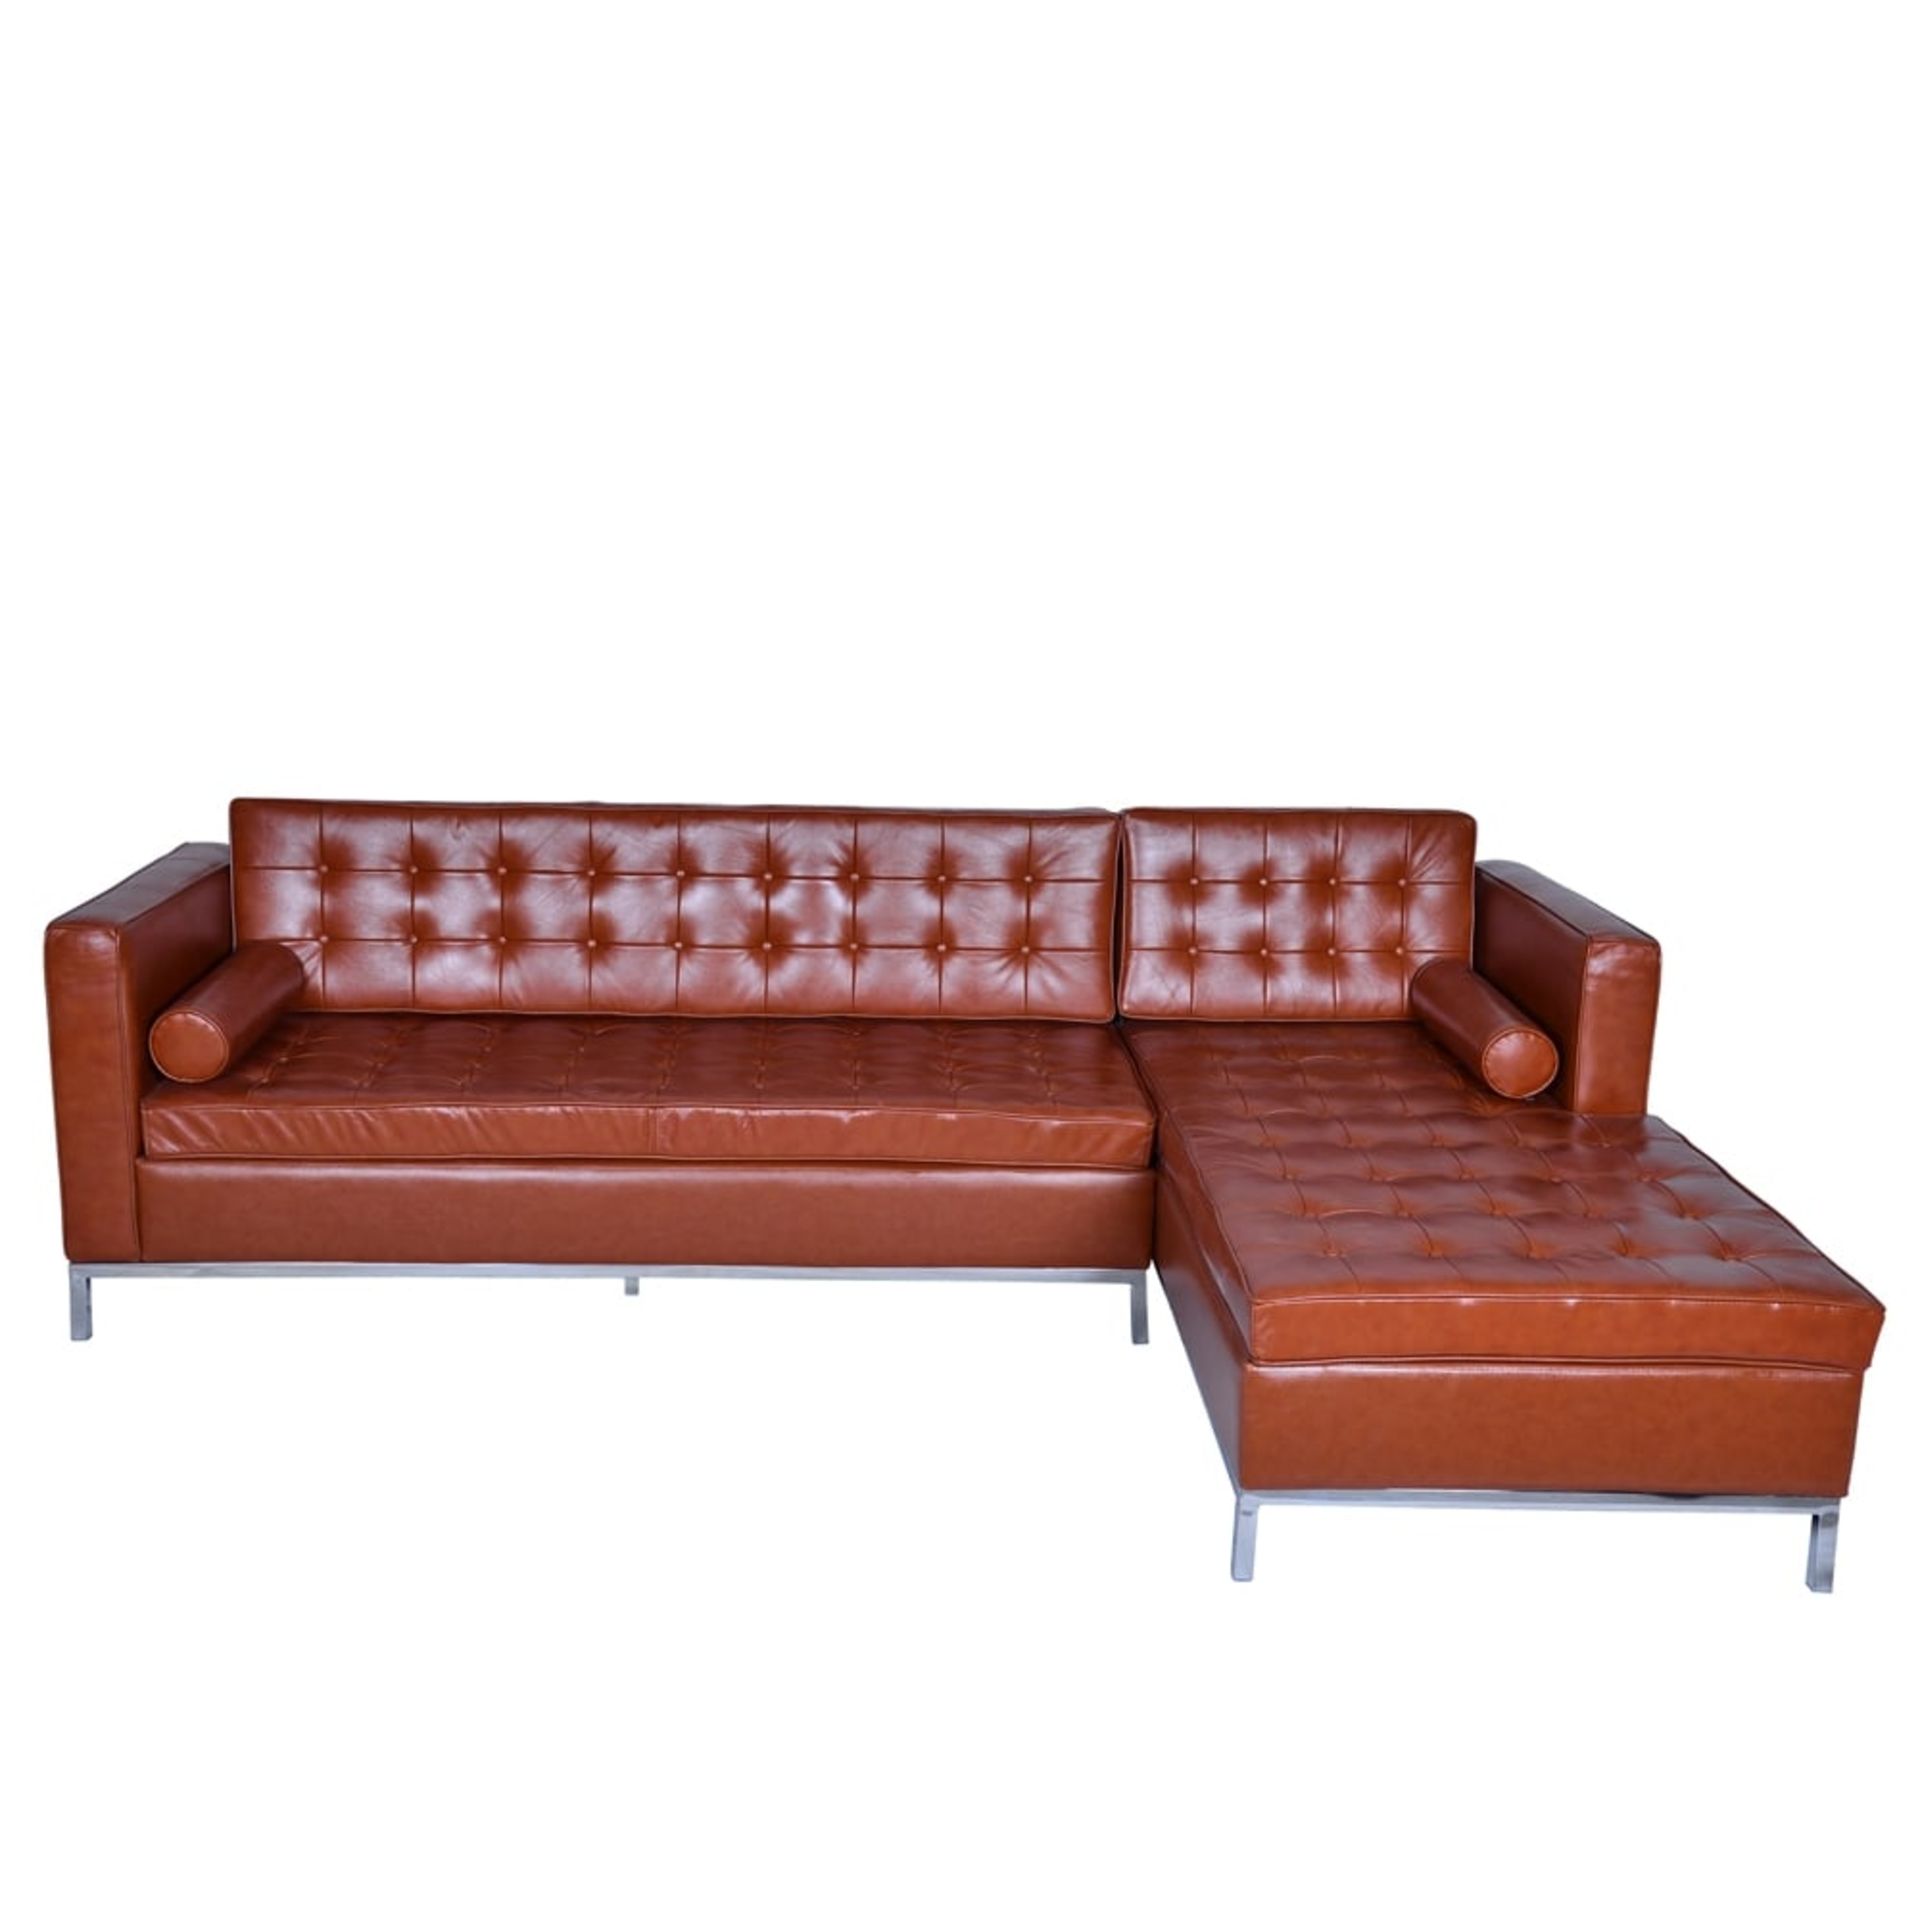 Leather Carpi Left Corner Sofa - Image 2 of 3